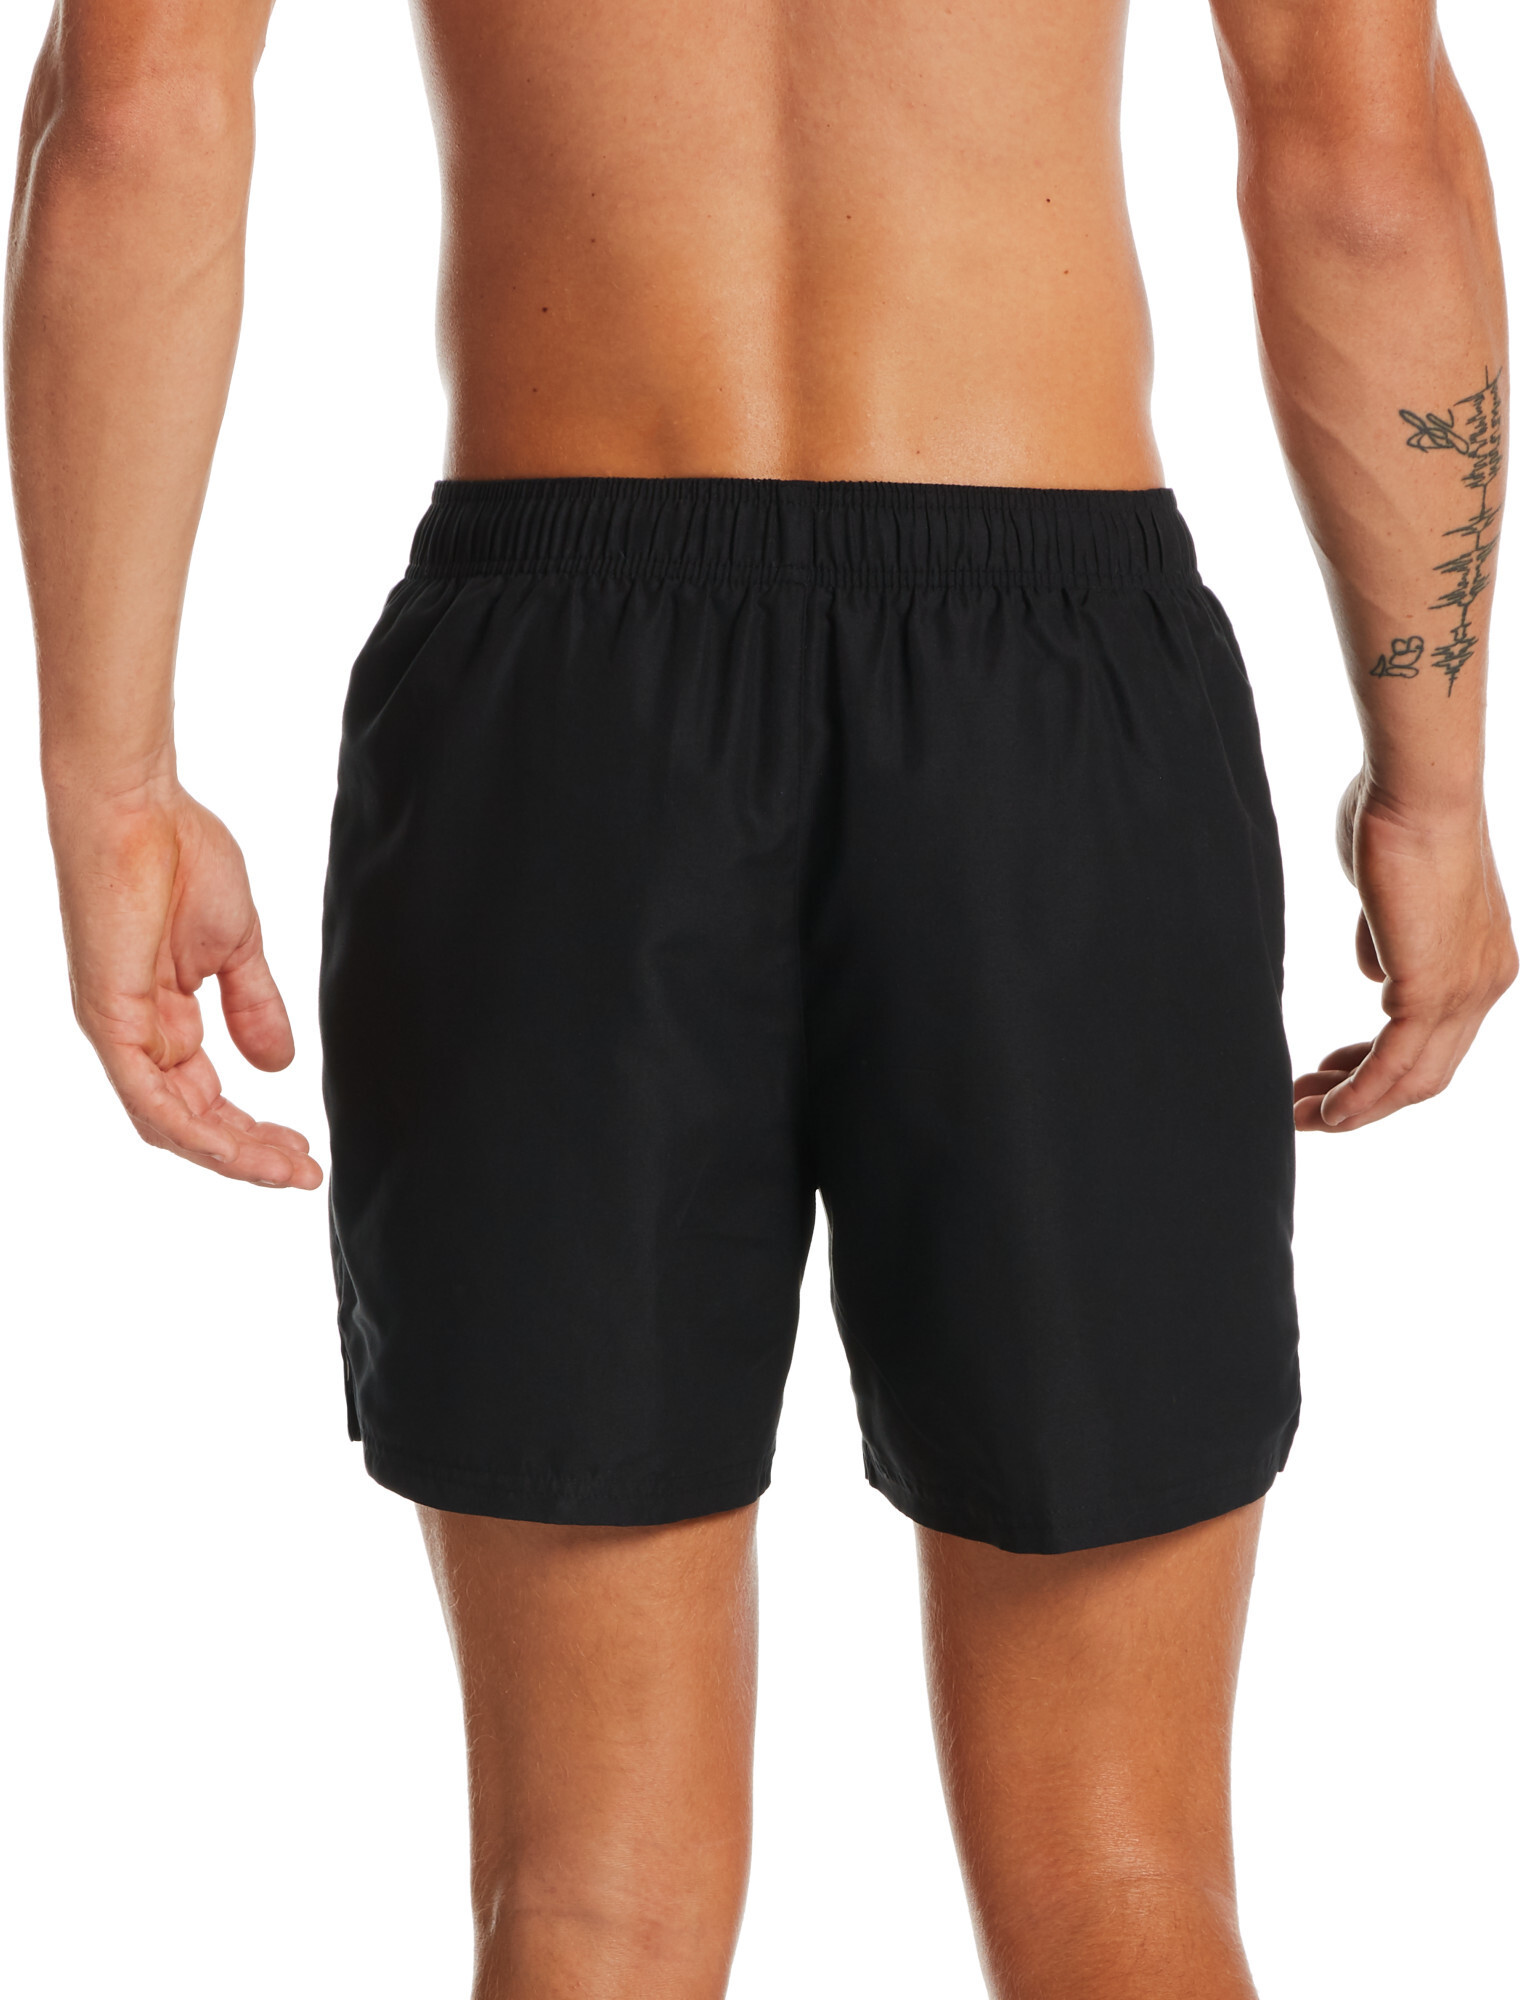 Nike Swim Essential Lap 5 Volley Shorts Men black at bikester.co.uk